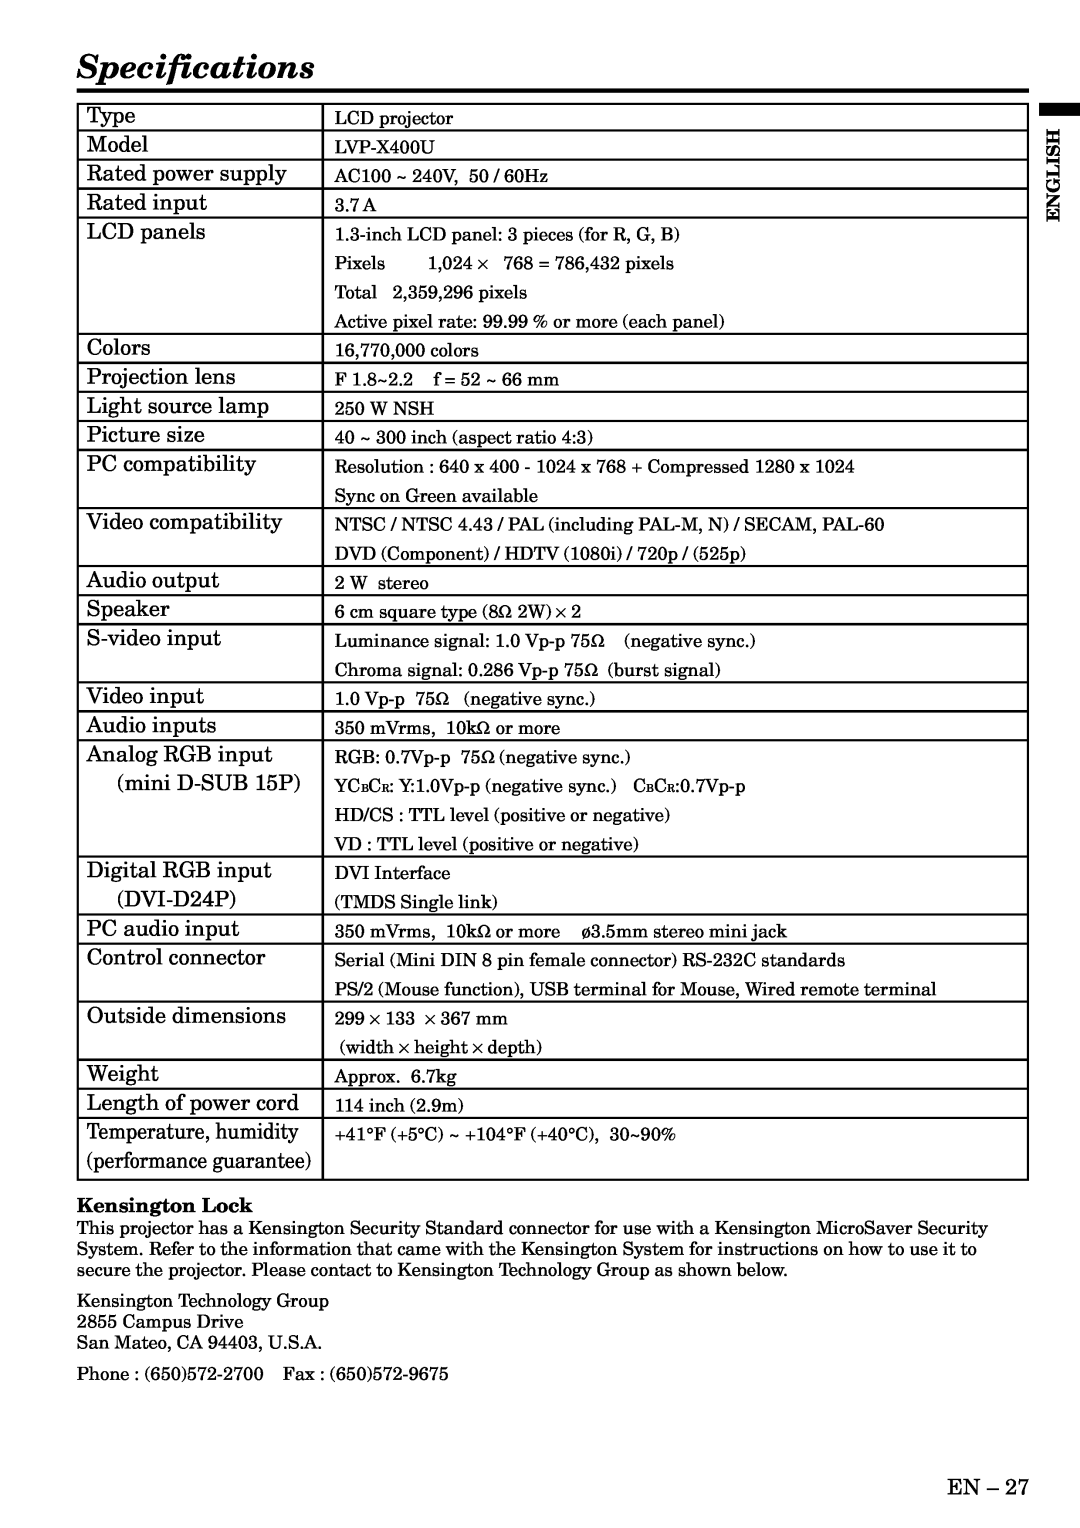 Mitsubishi Electronics LVP-X400U user manual Specifications, Kensington Lock 